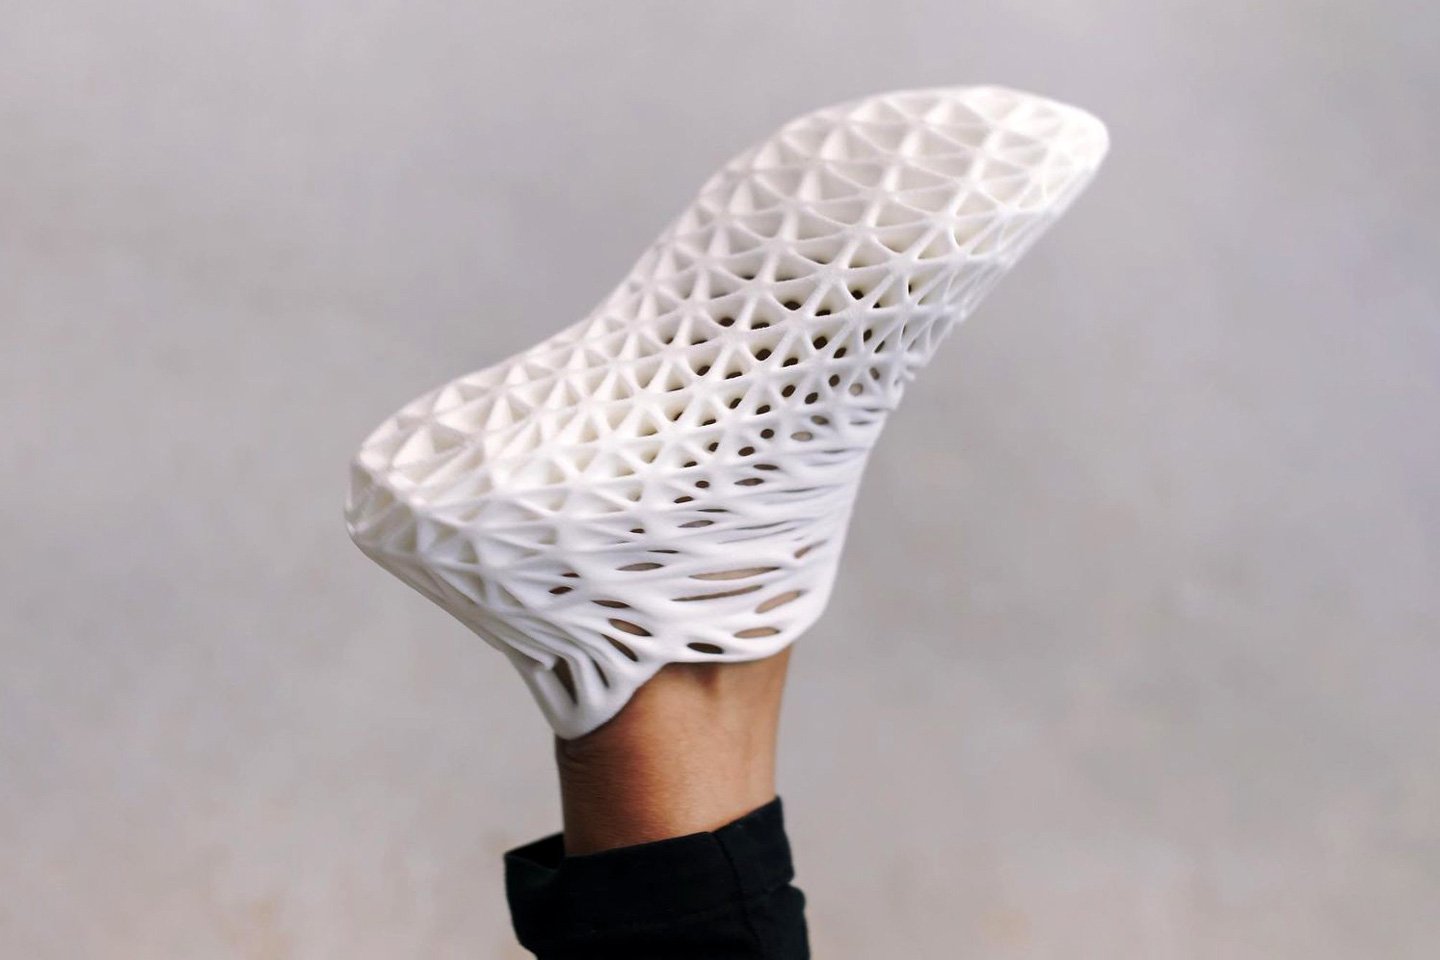 Top 10 3D printed design trends of 2022